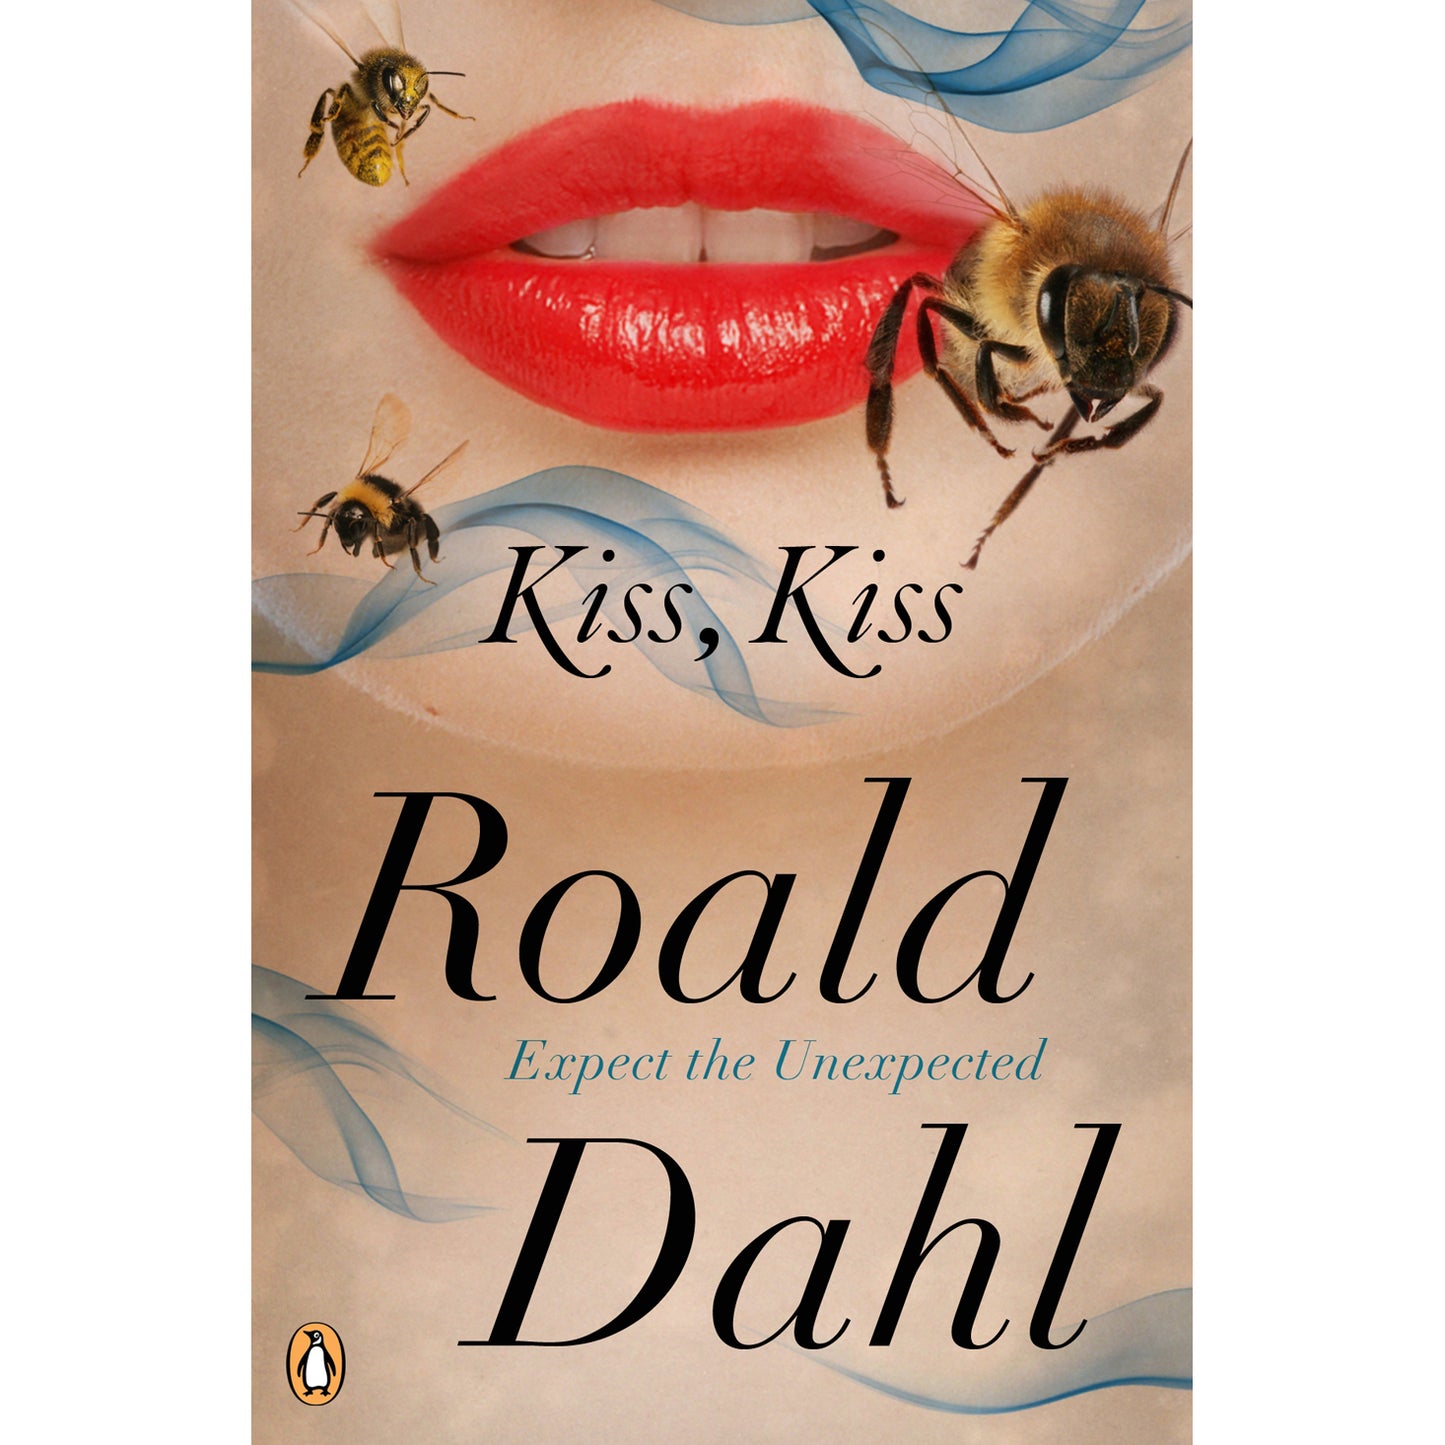 Kiss Kiss by Roald Dahl